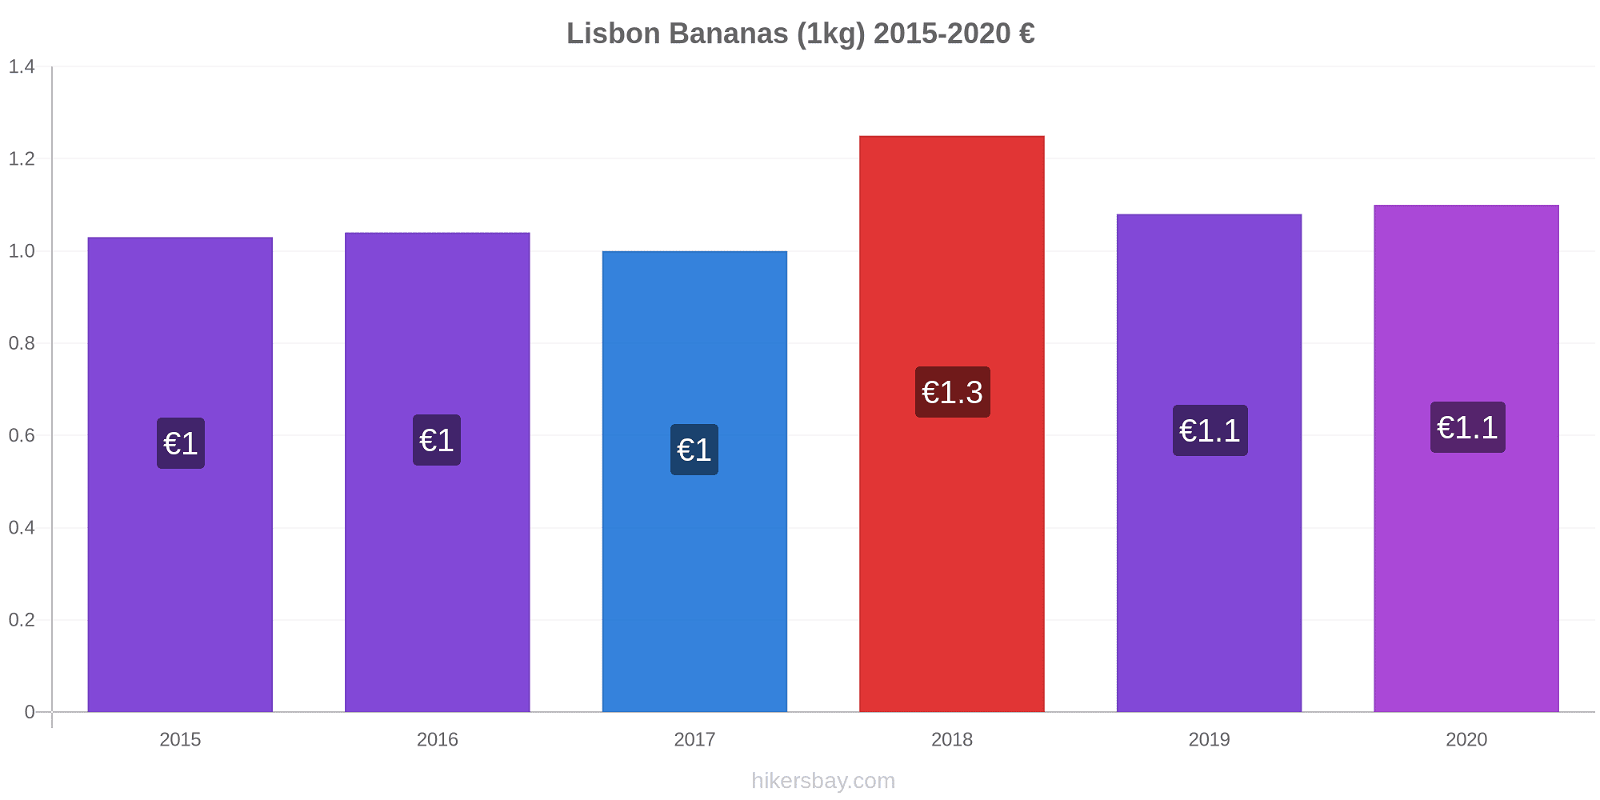 Lisbon price changes Bananas (1kg) hikersbay.com